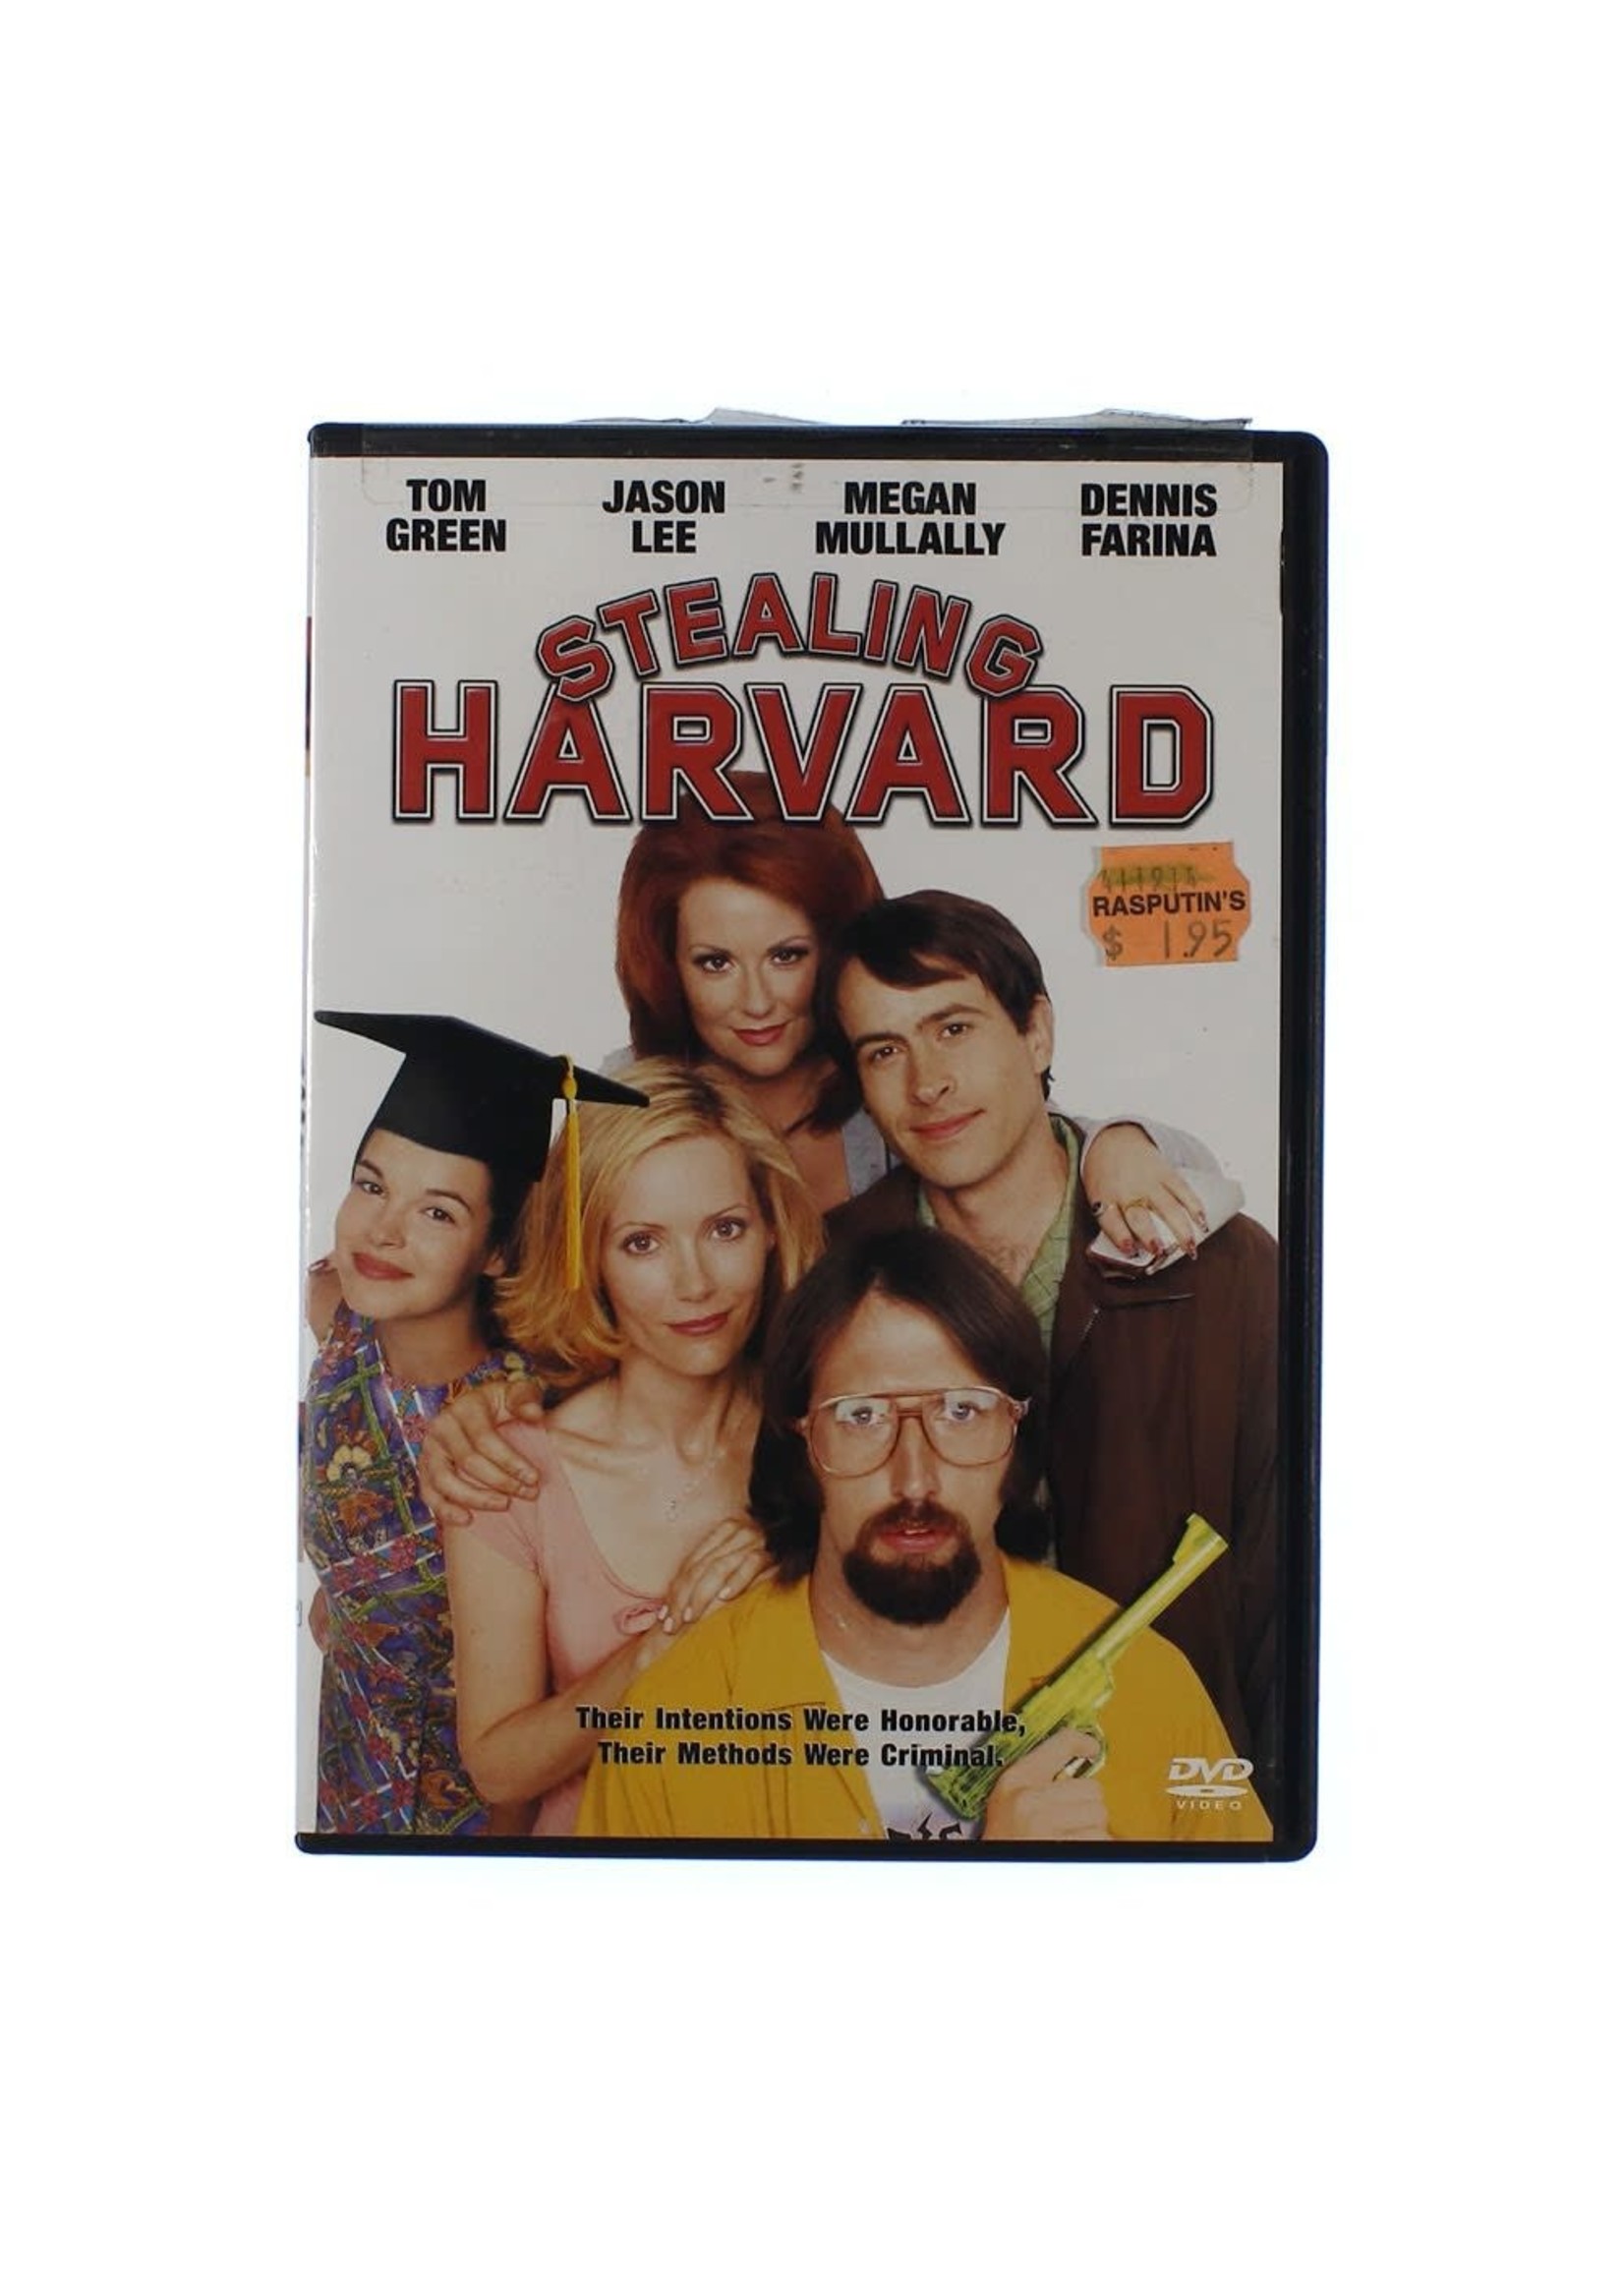 Stealing Harvard [DVD] [widescreen] [2003] [multilingual] [region 1]